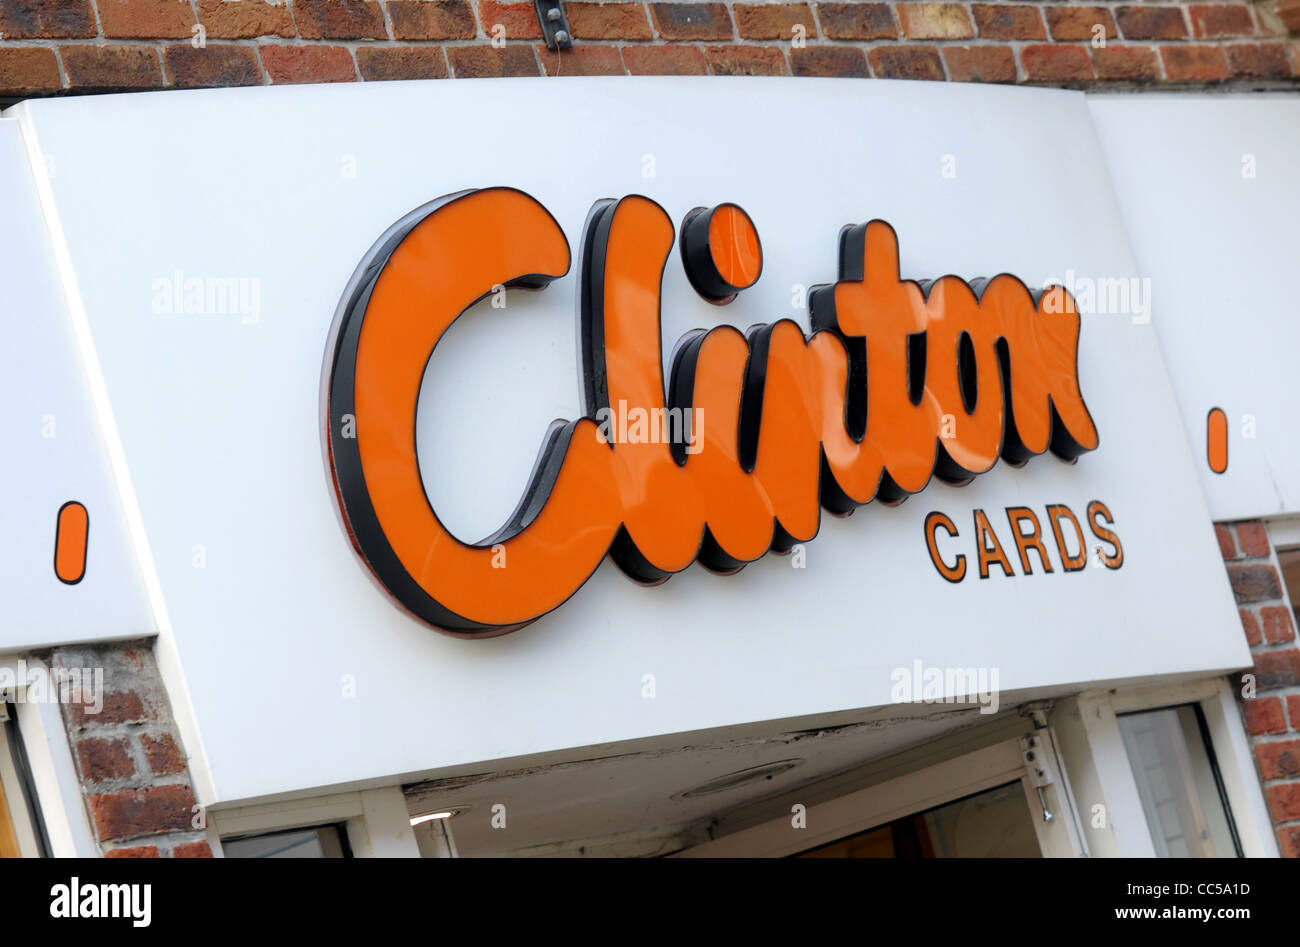 Clinton Cards shop, REINO UNIDO Foto de stock